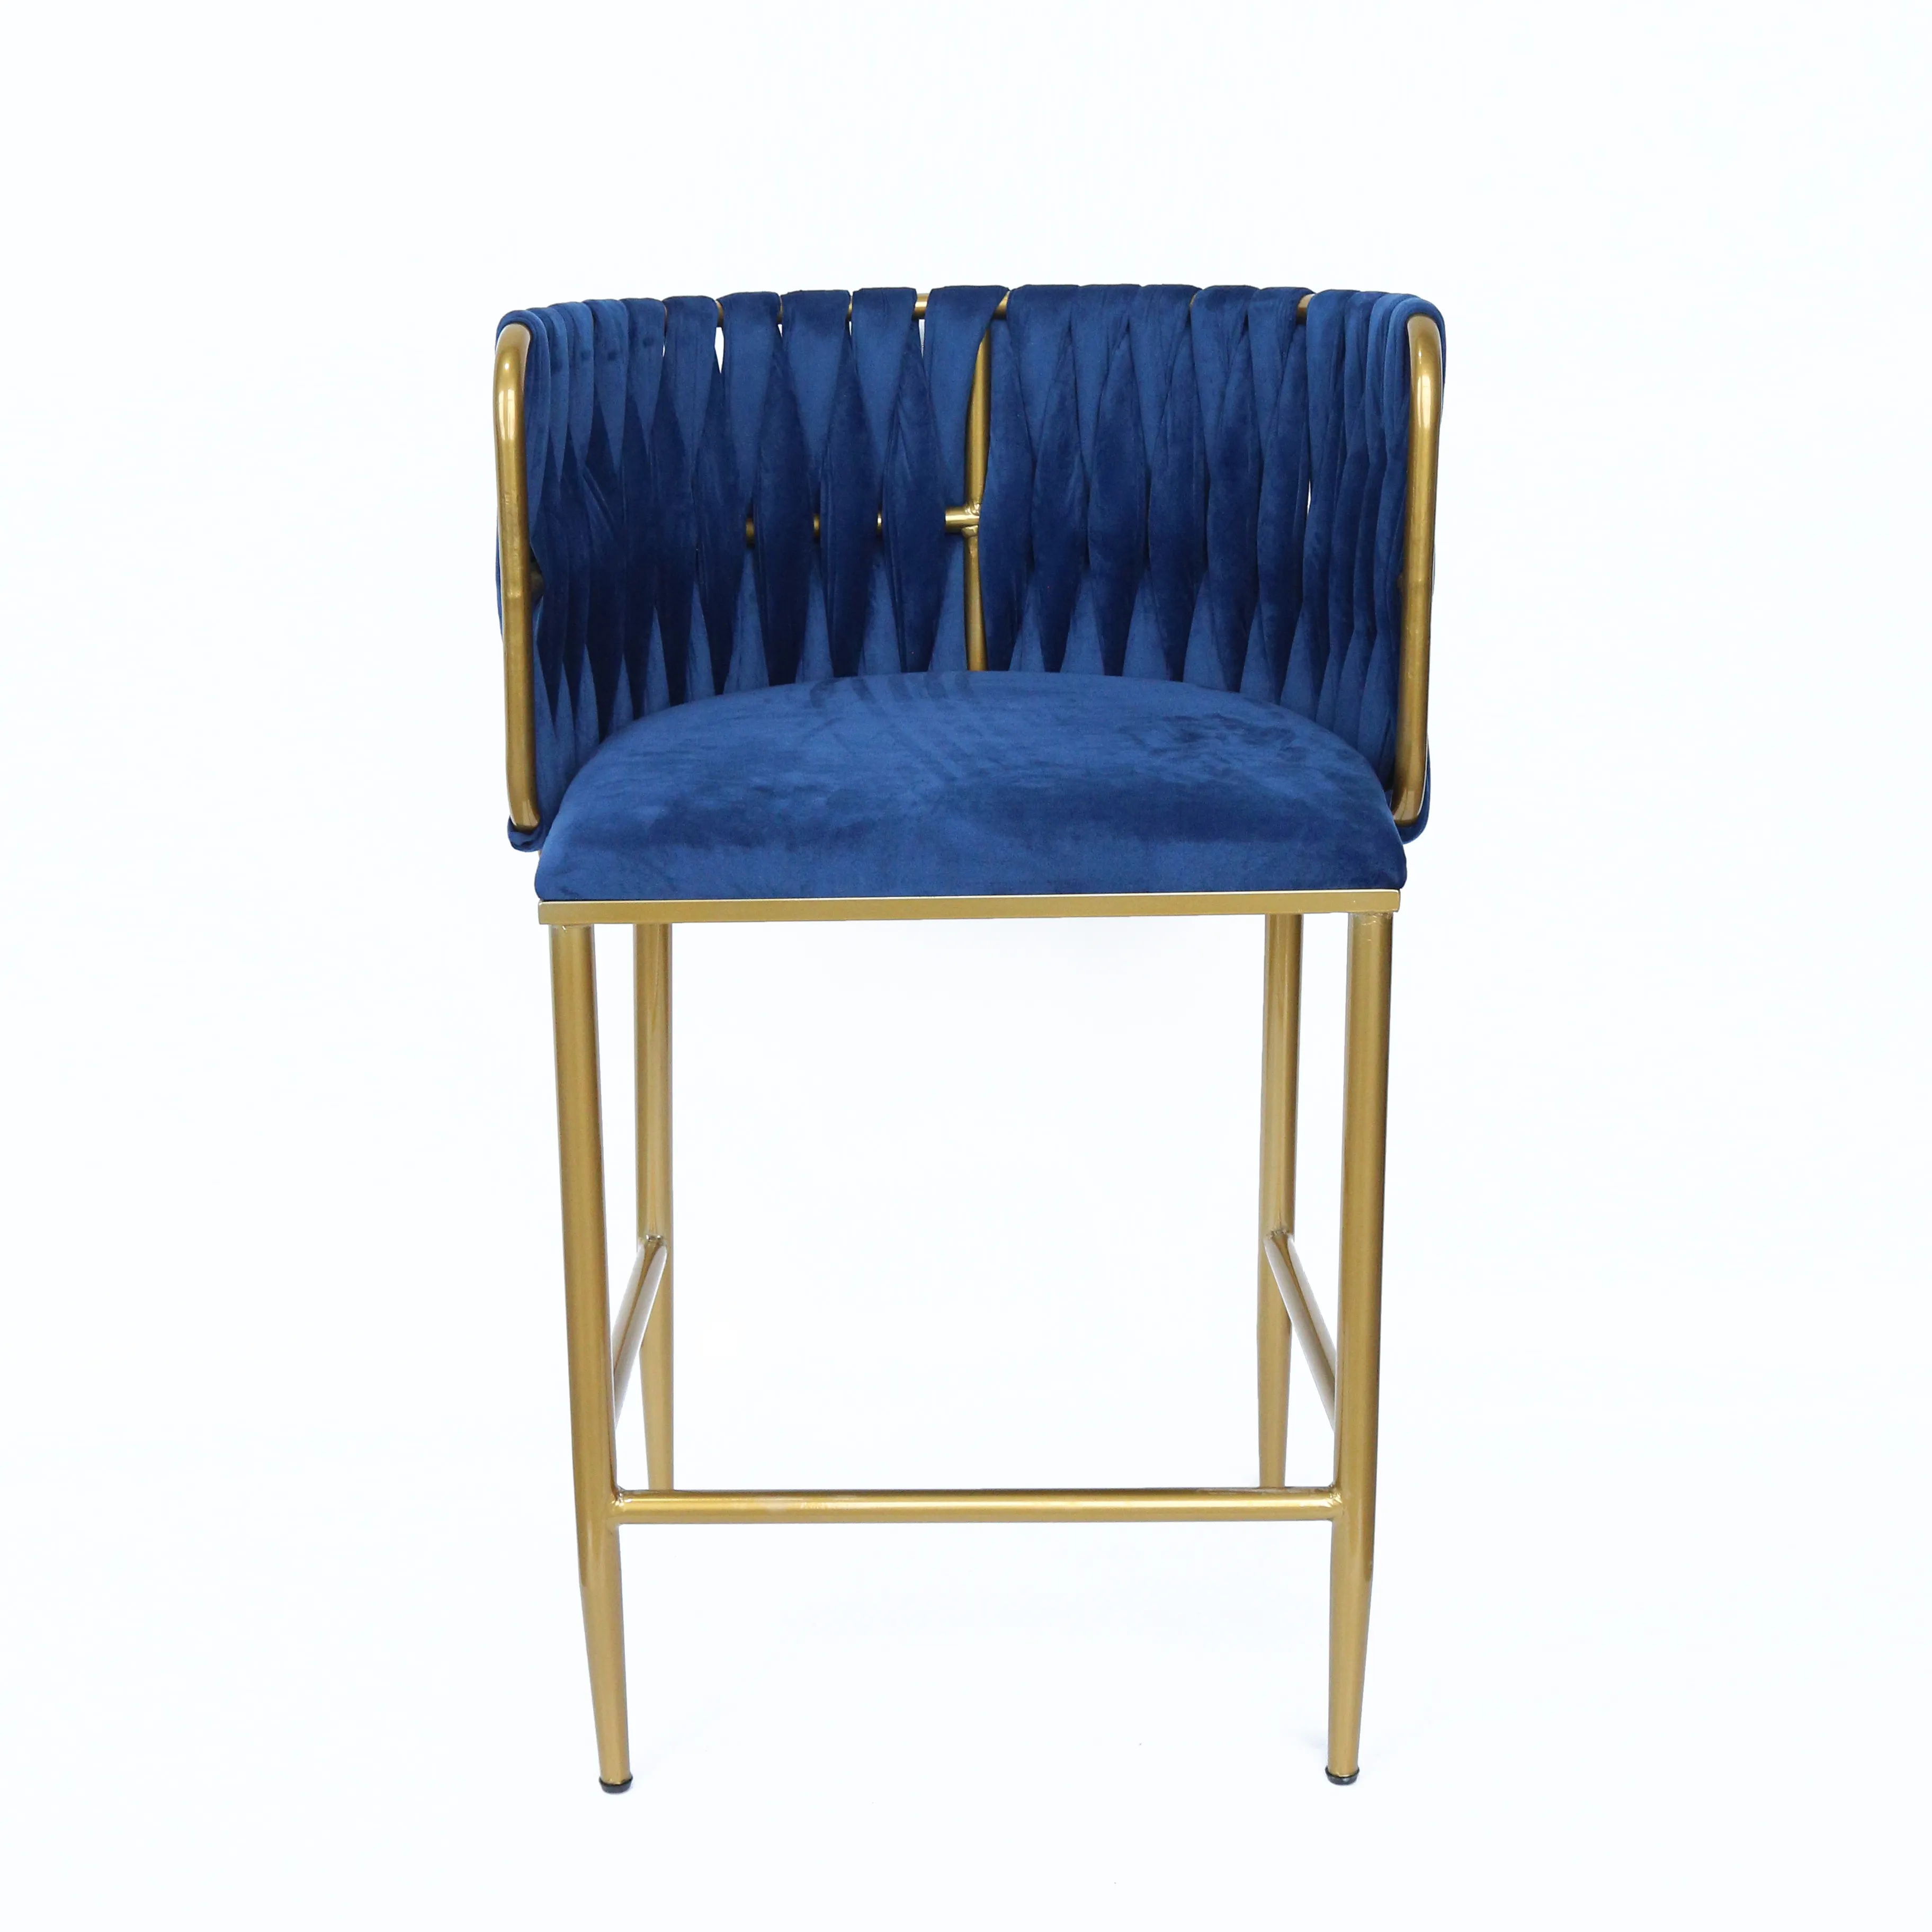 Tabourets de bar Design moderne luxe Vintage or métal jambe velours bleu rouge vert tapissé bras haut tabouret de bar chaise